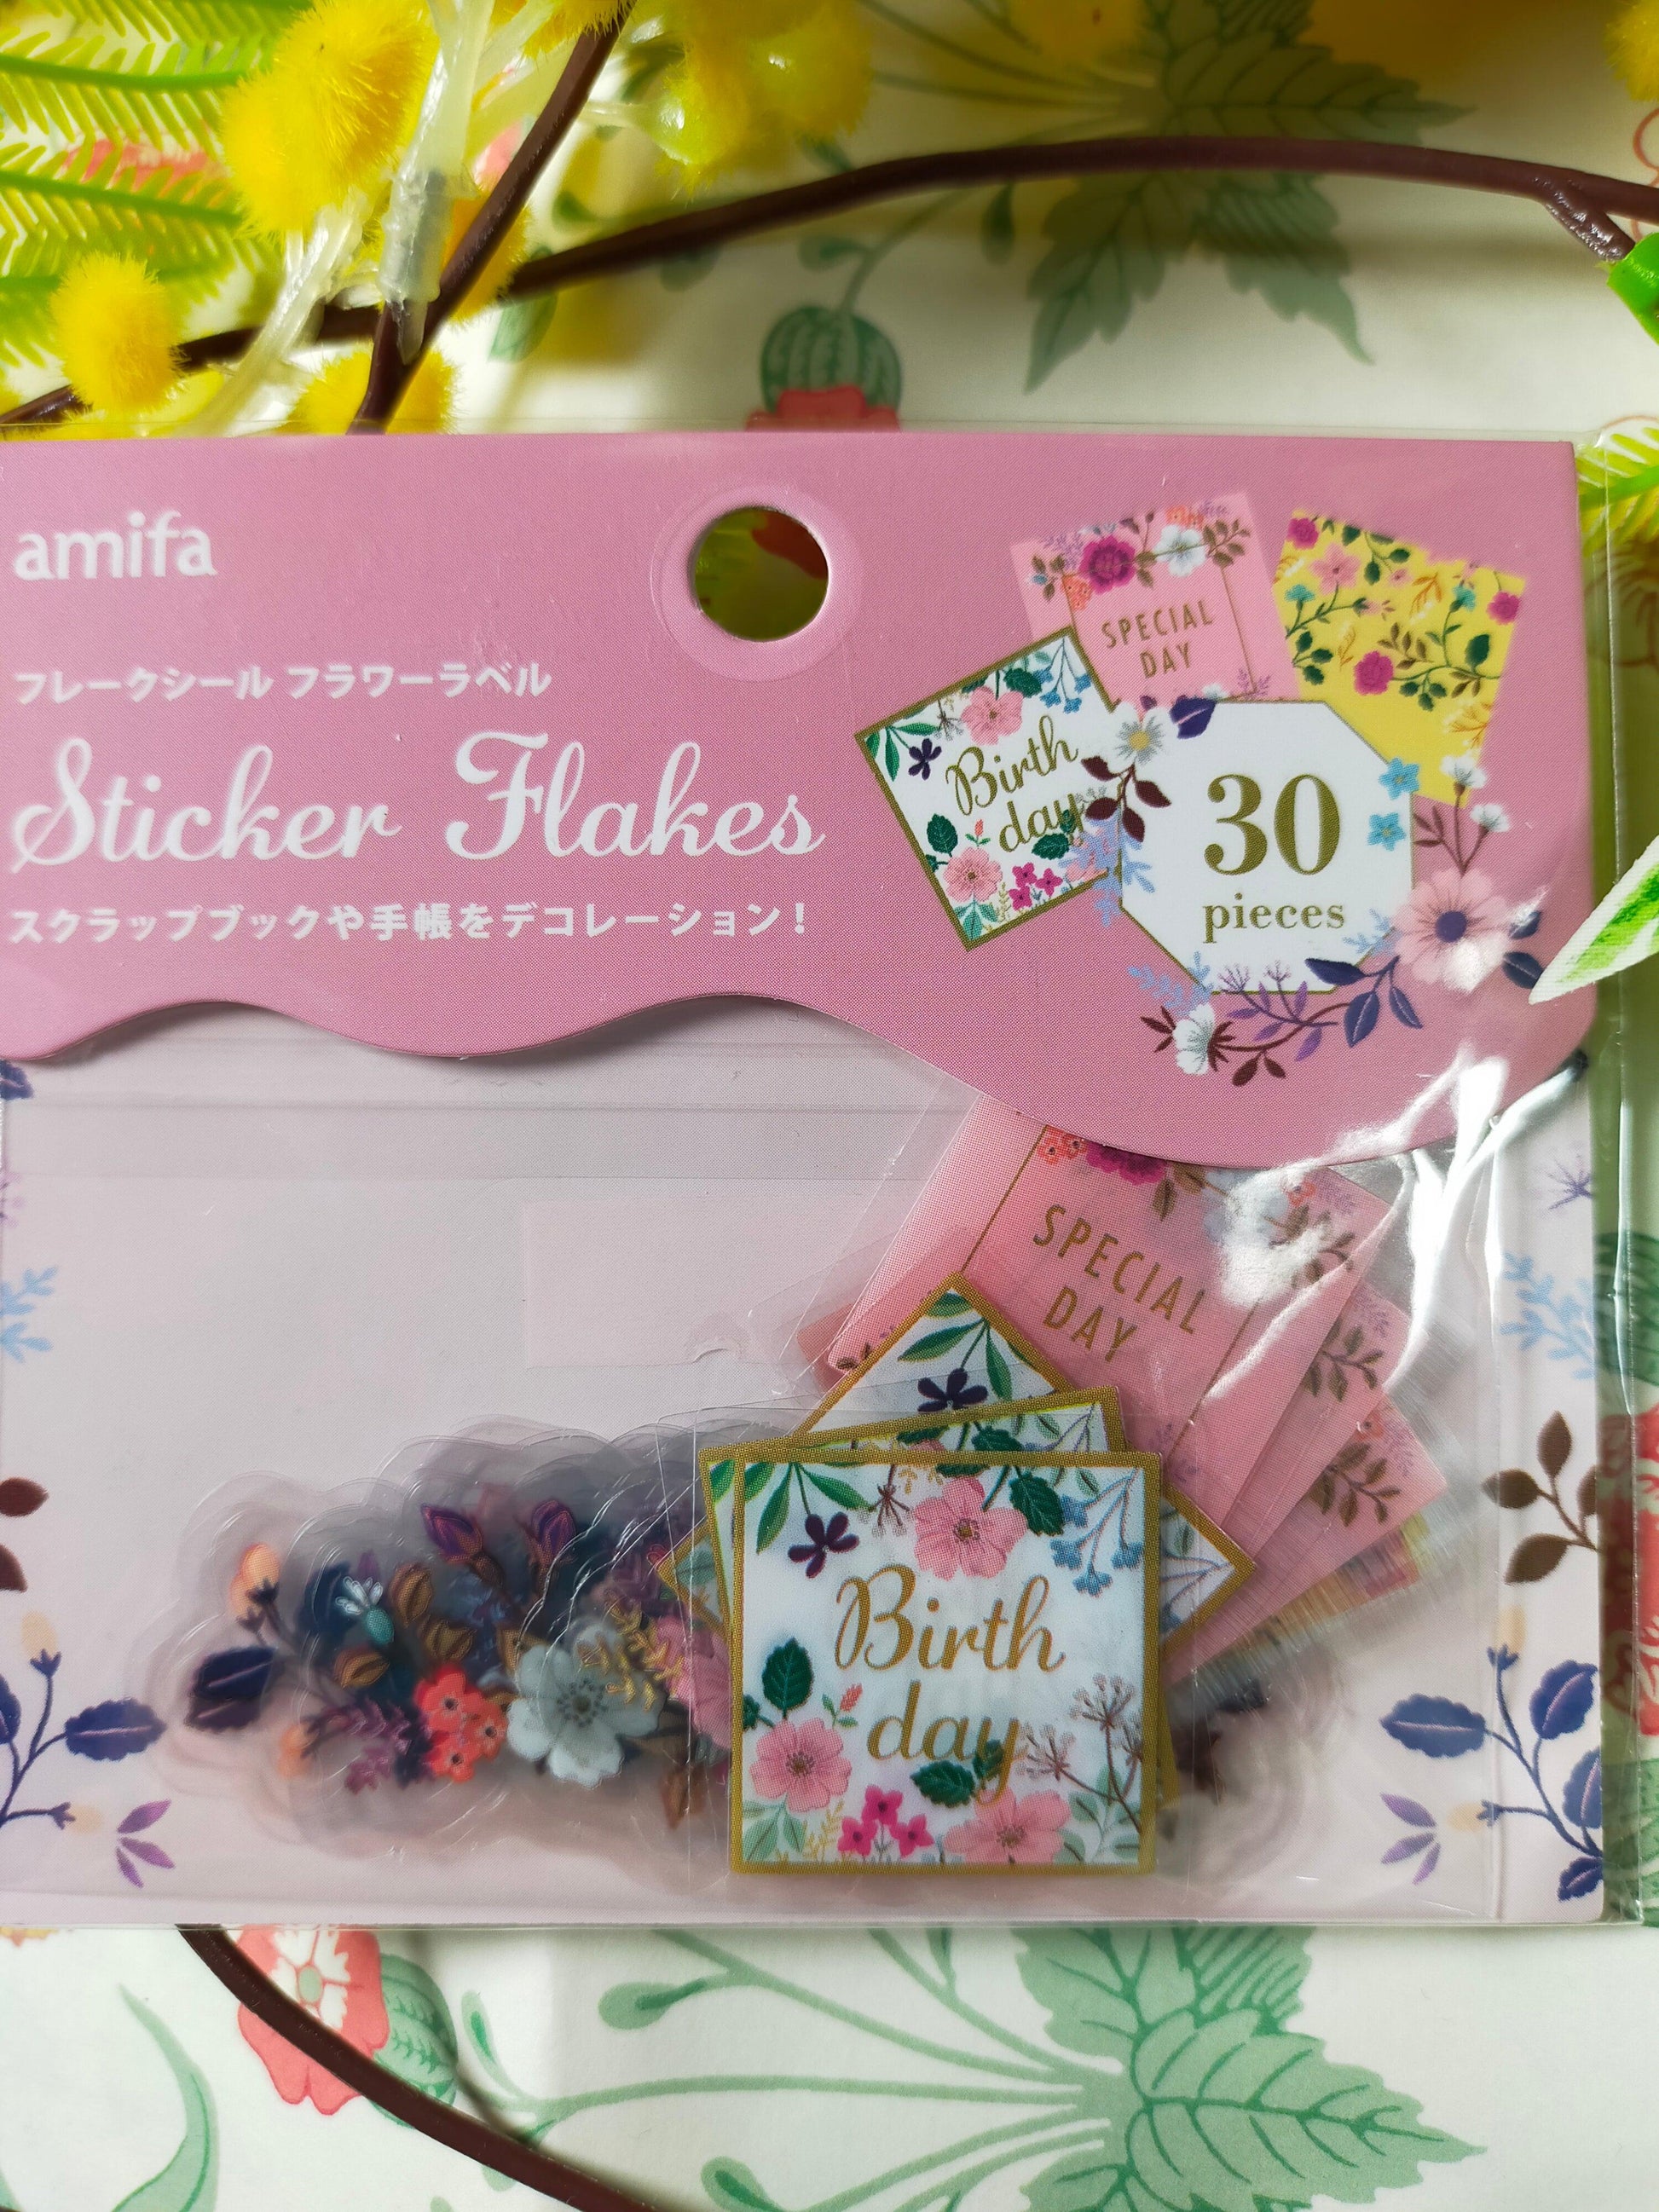 Sticker Flakes clear 10designs*3pieces,amifa_Red Bird / Pink Flower Label /Green Stamp /Deep Green Flower Label